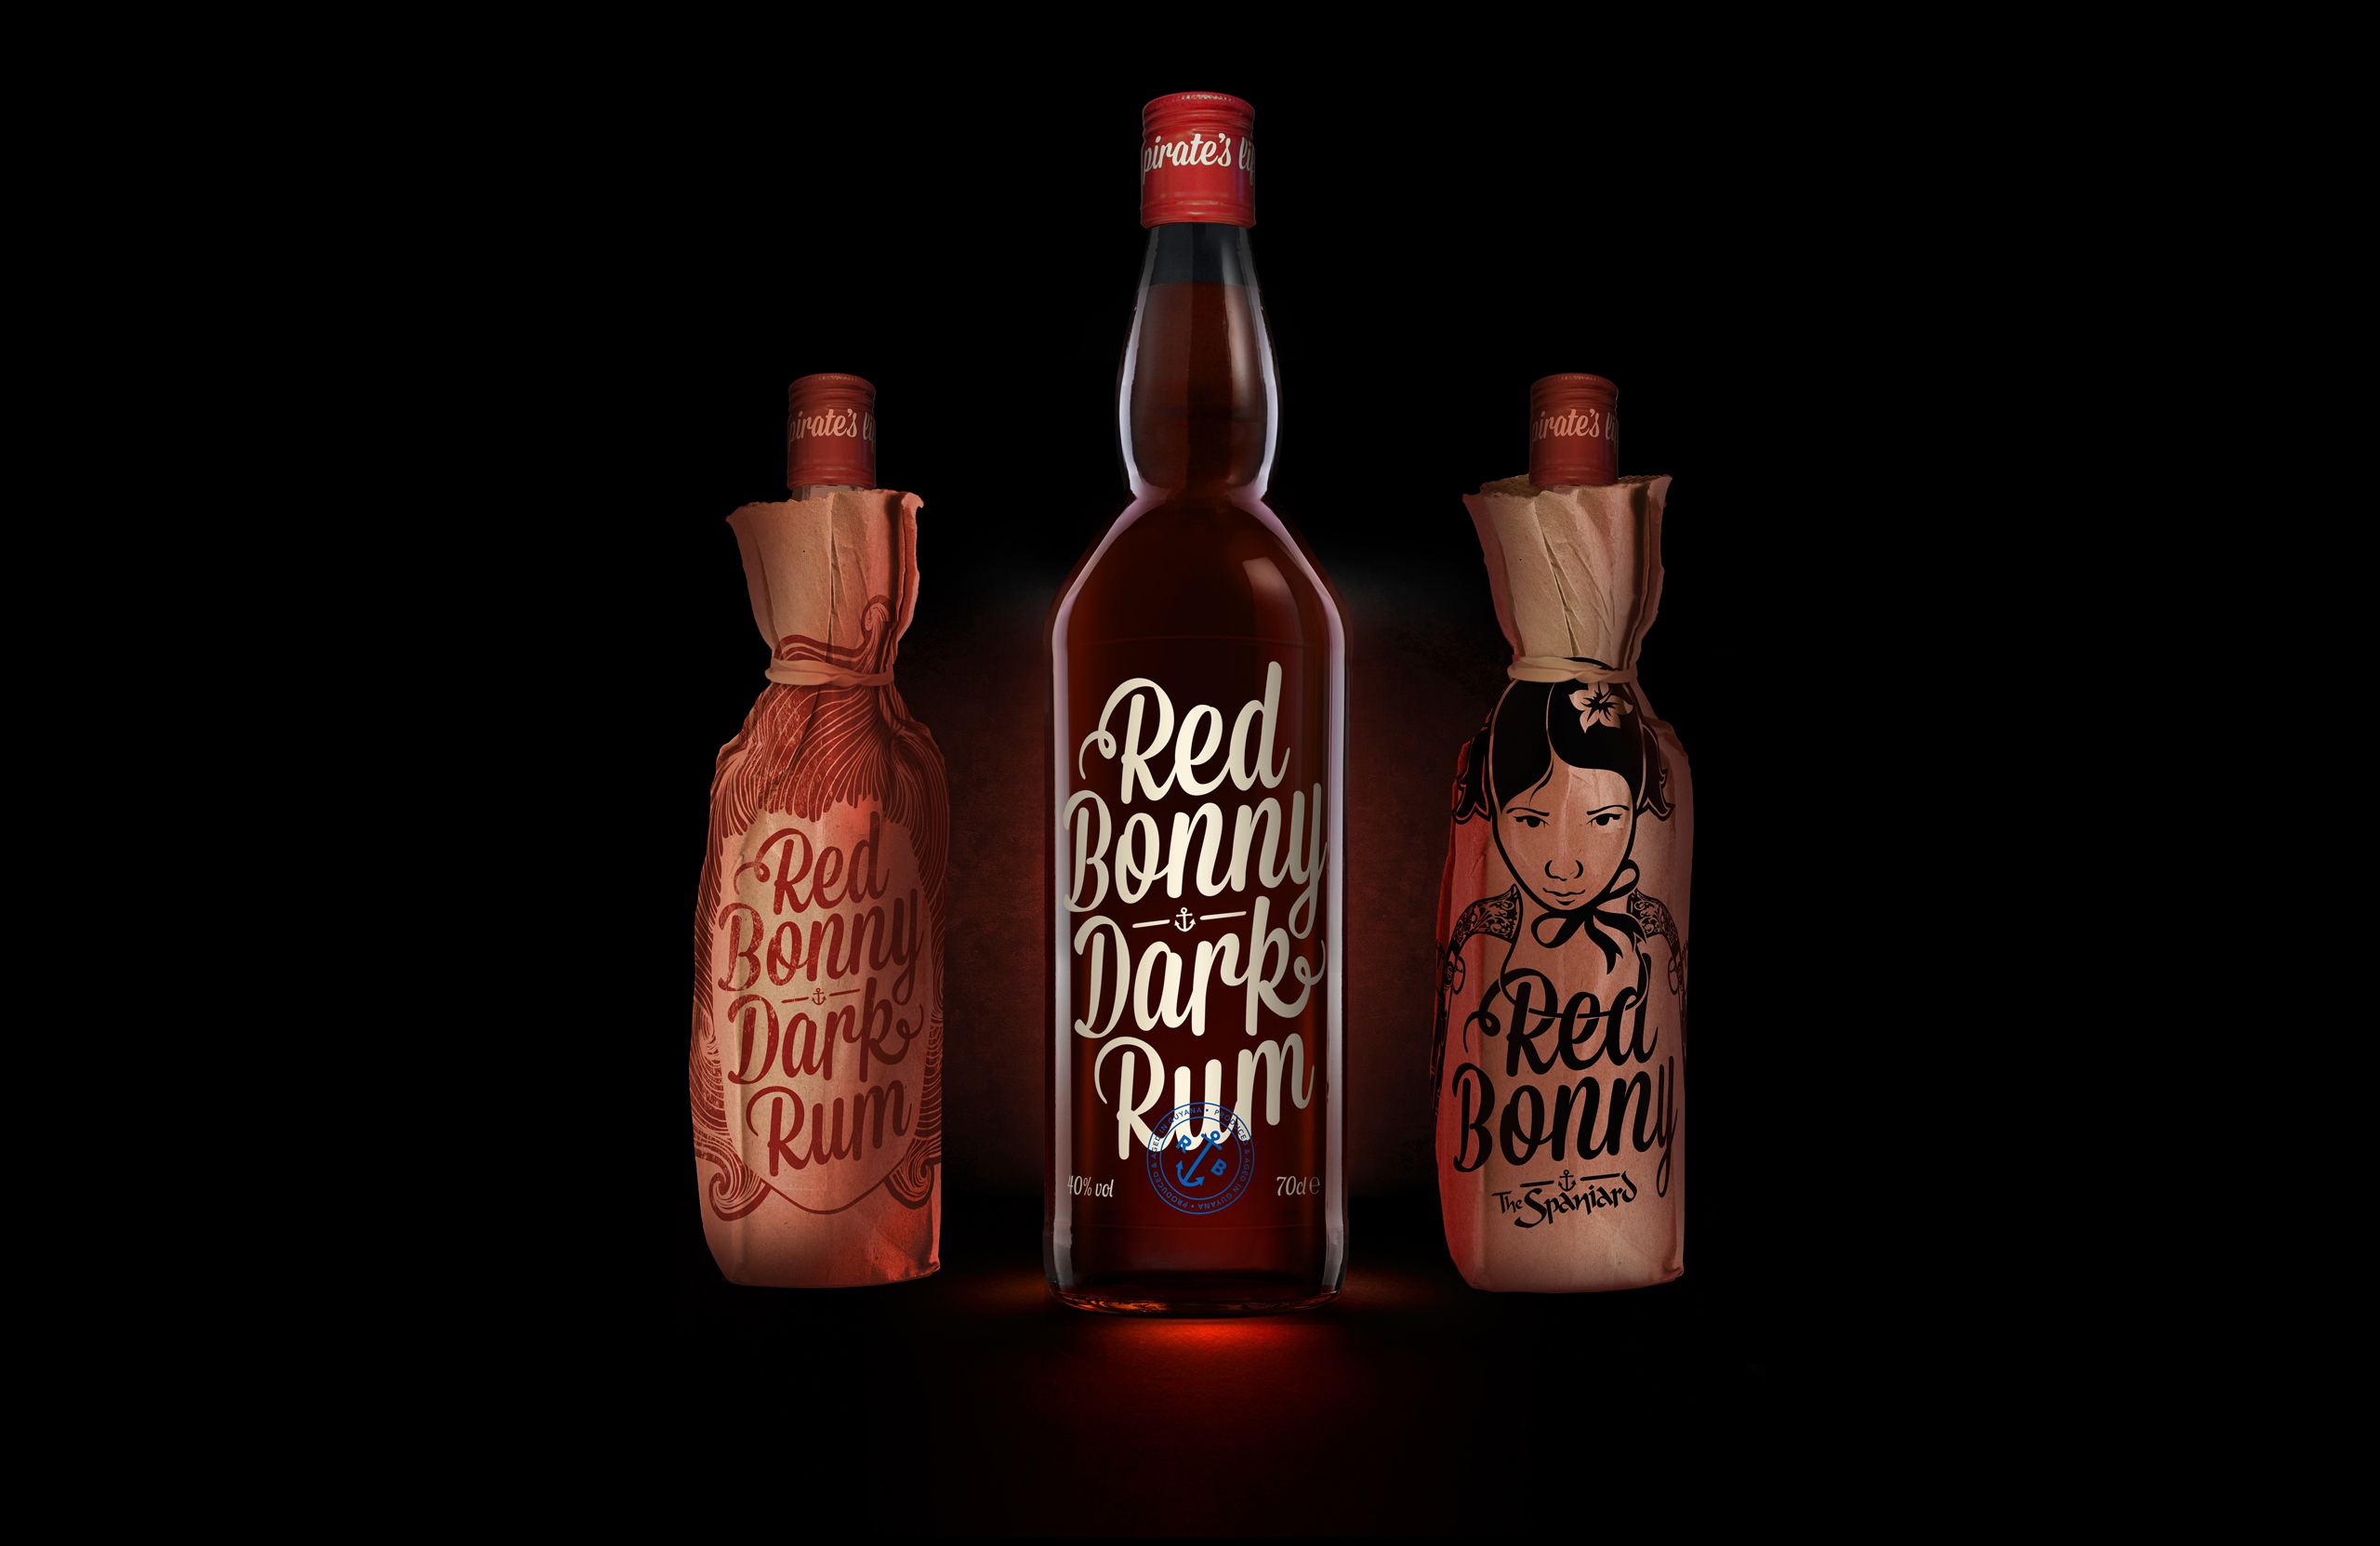 Red Bonny Dark Rum